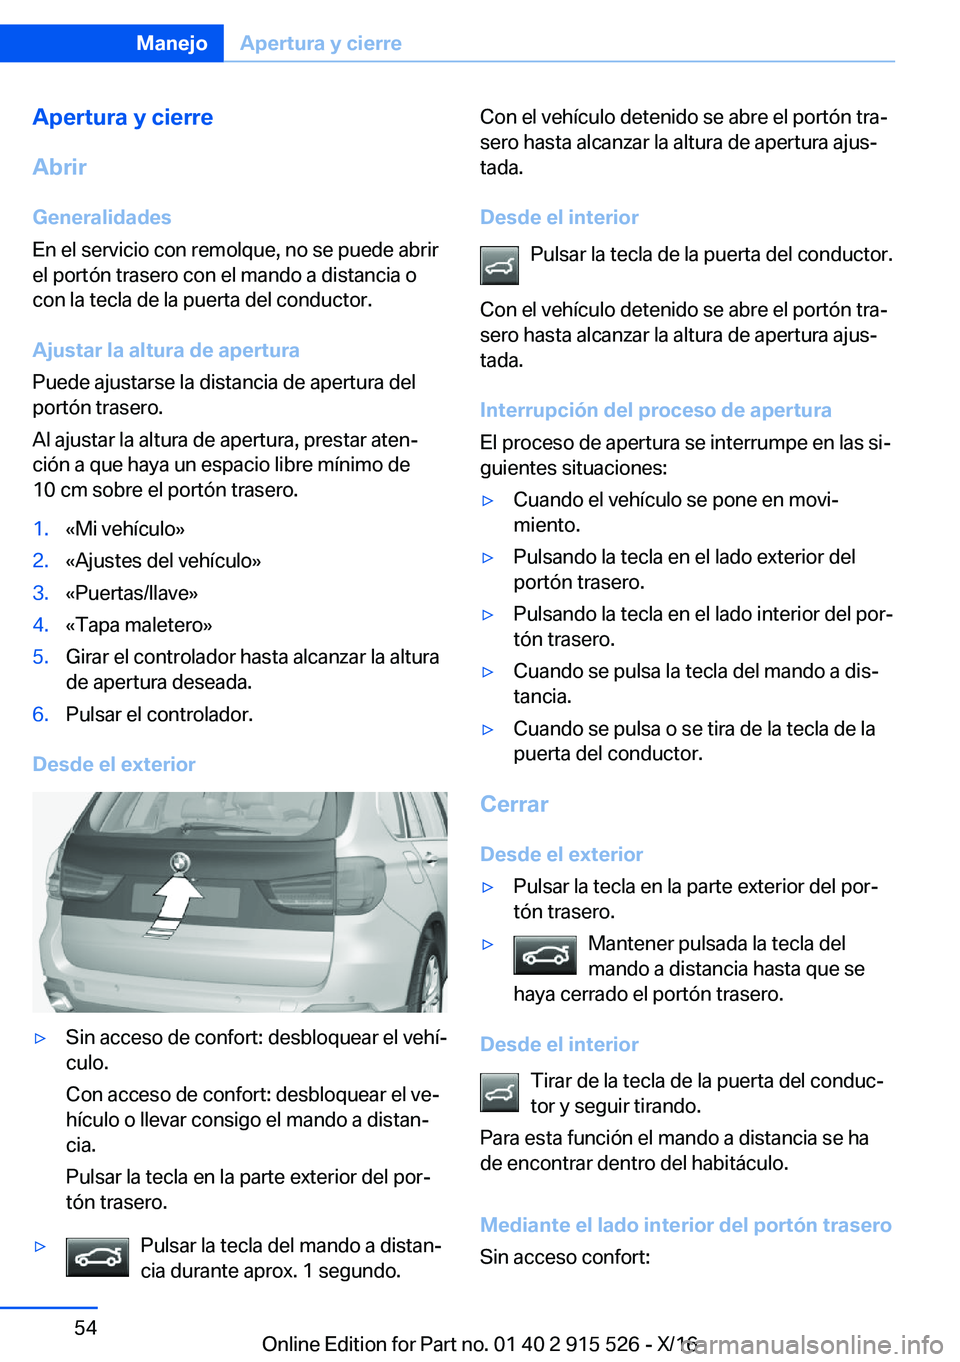 BMW X5 2017  Manuales de Empleo (in Spanish) �A�p�e�r�t�u�r�a��y��c�i�e�r�r�e
�A�b�r�i�r
�G�e�n�e�r�a�l�i�d�a�d�e�s
�E�n� �e�l� �s�e�r�v�i�c�i�o� �c�o�n� �r�e�m�o�l�q�u�e�,� �n�o� �s�e� �p�u�e�d�e� �a�b�r�i�r
�e�l� �p�o�r�t�